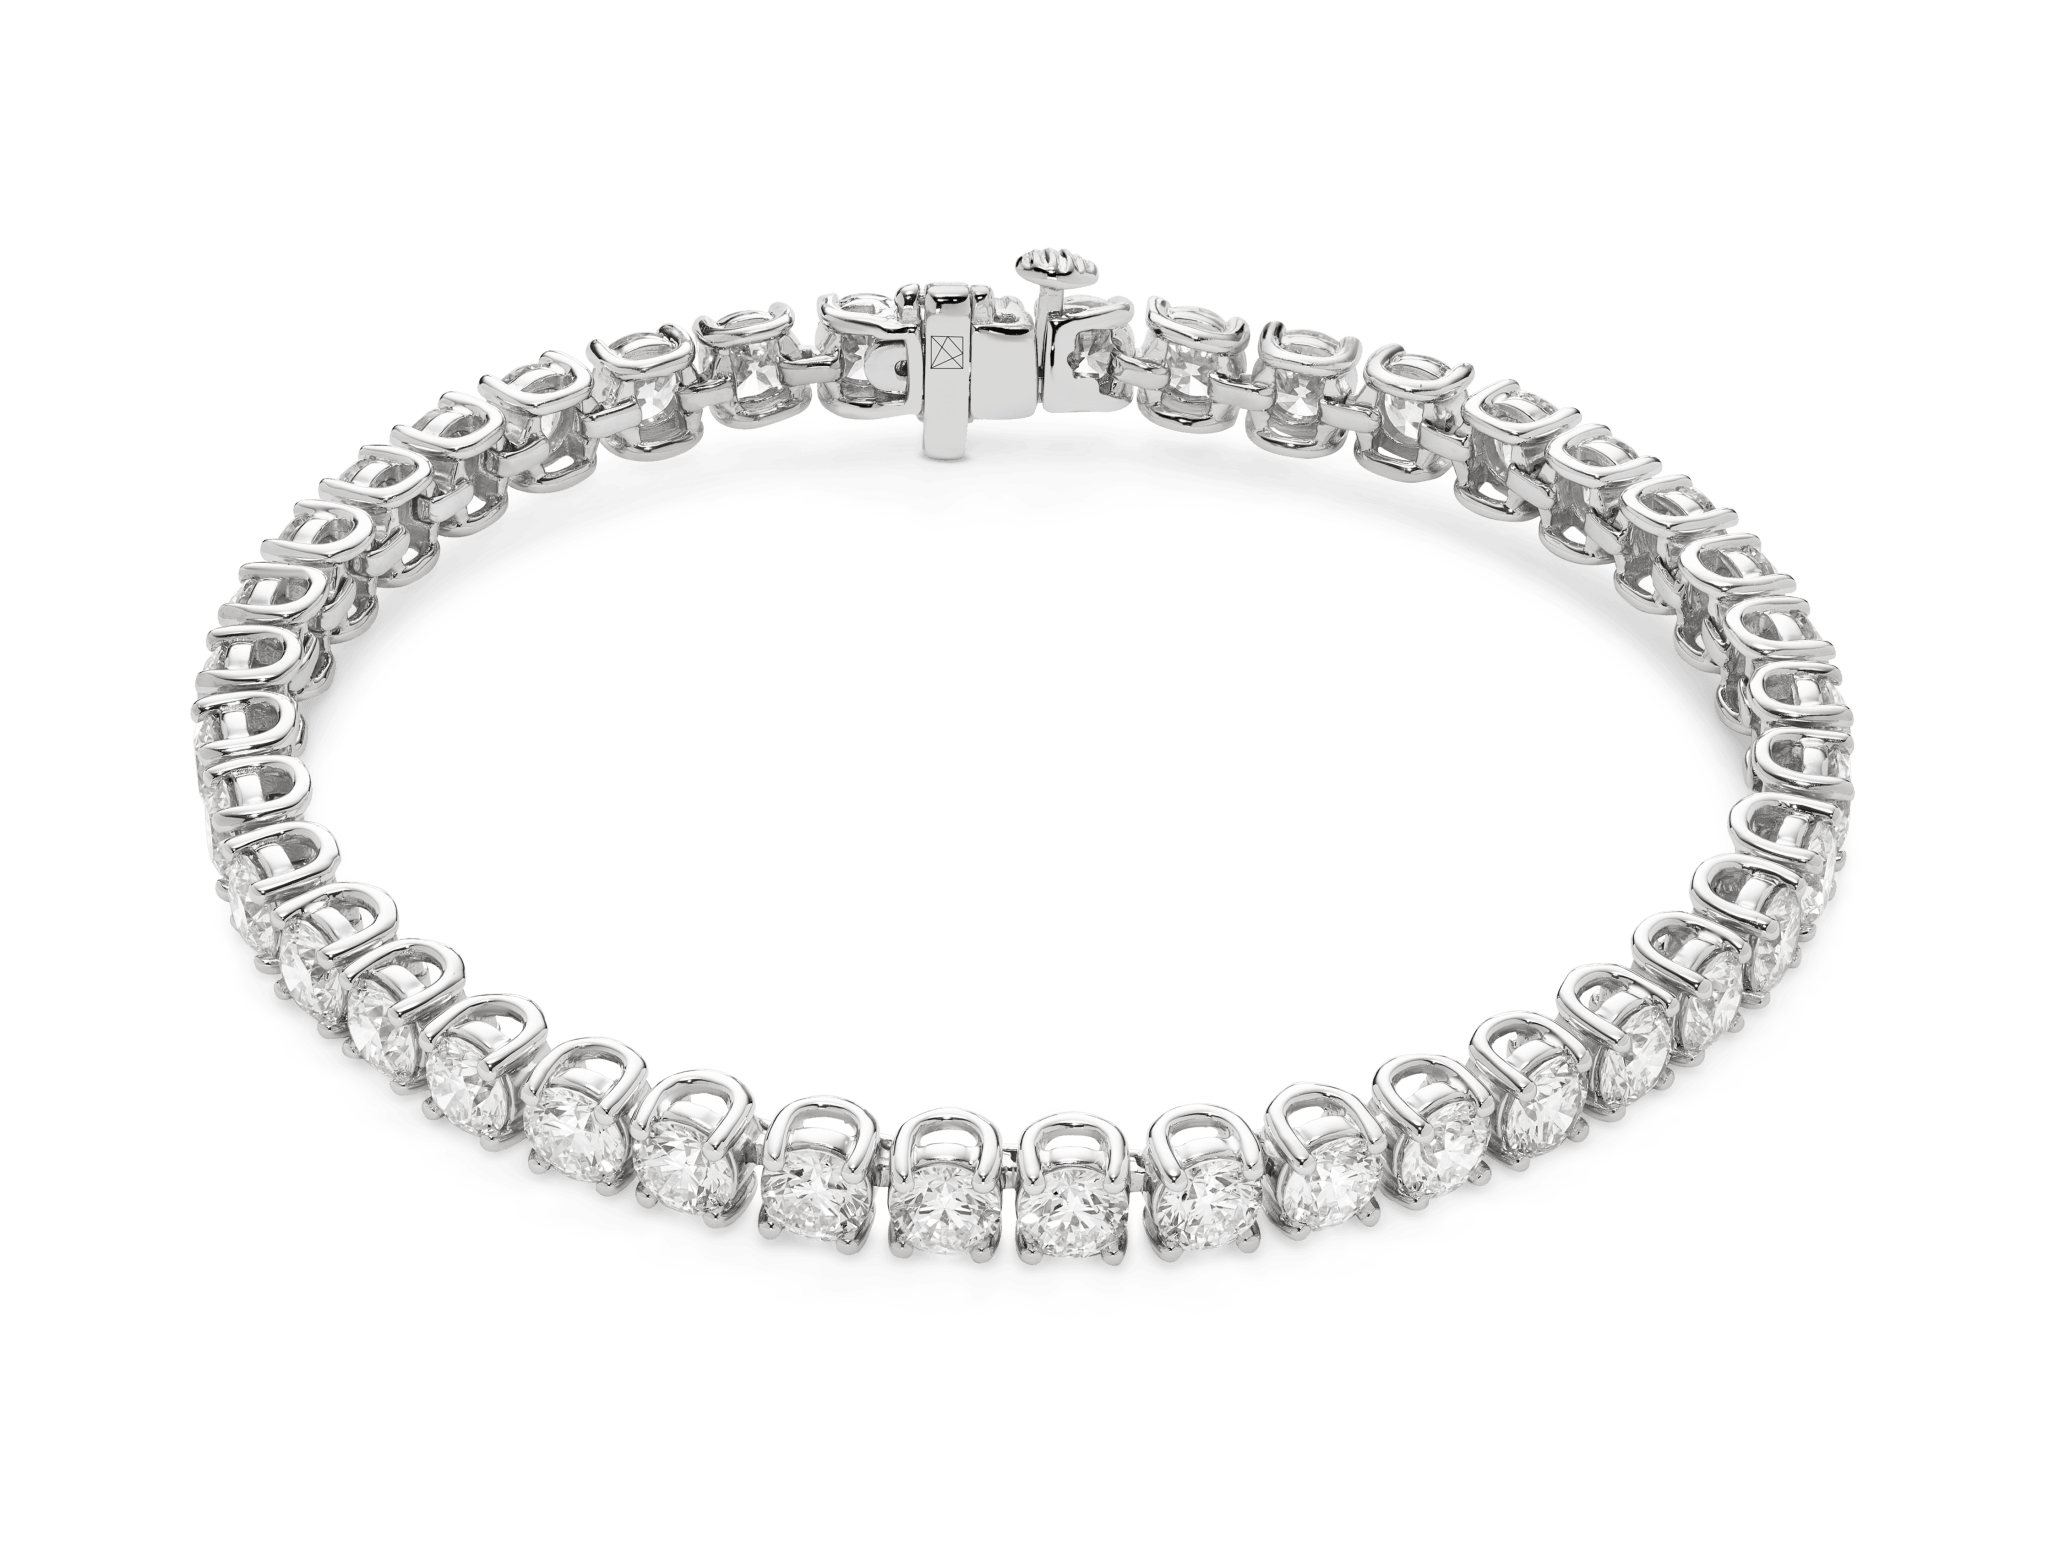 Lab-Grown Diamond Large Tennis Bracelet - G/H color, 6.5" length | White - #Lightbox Jewelry#